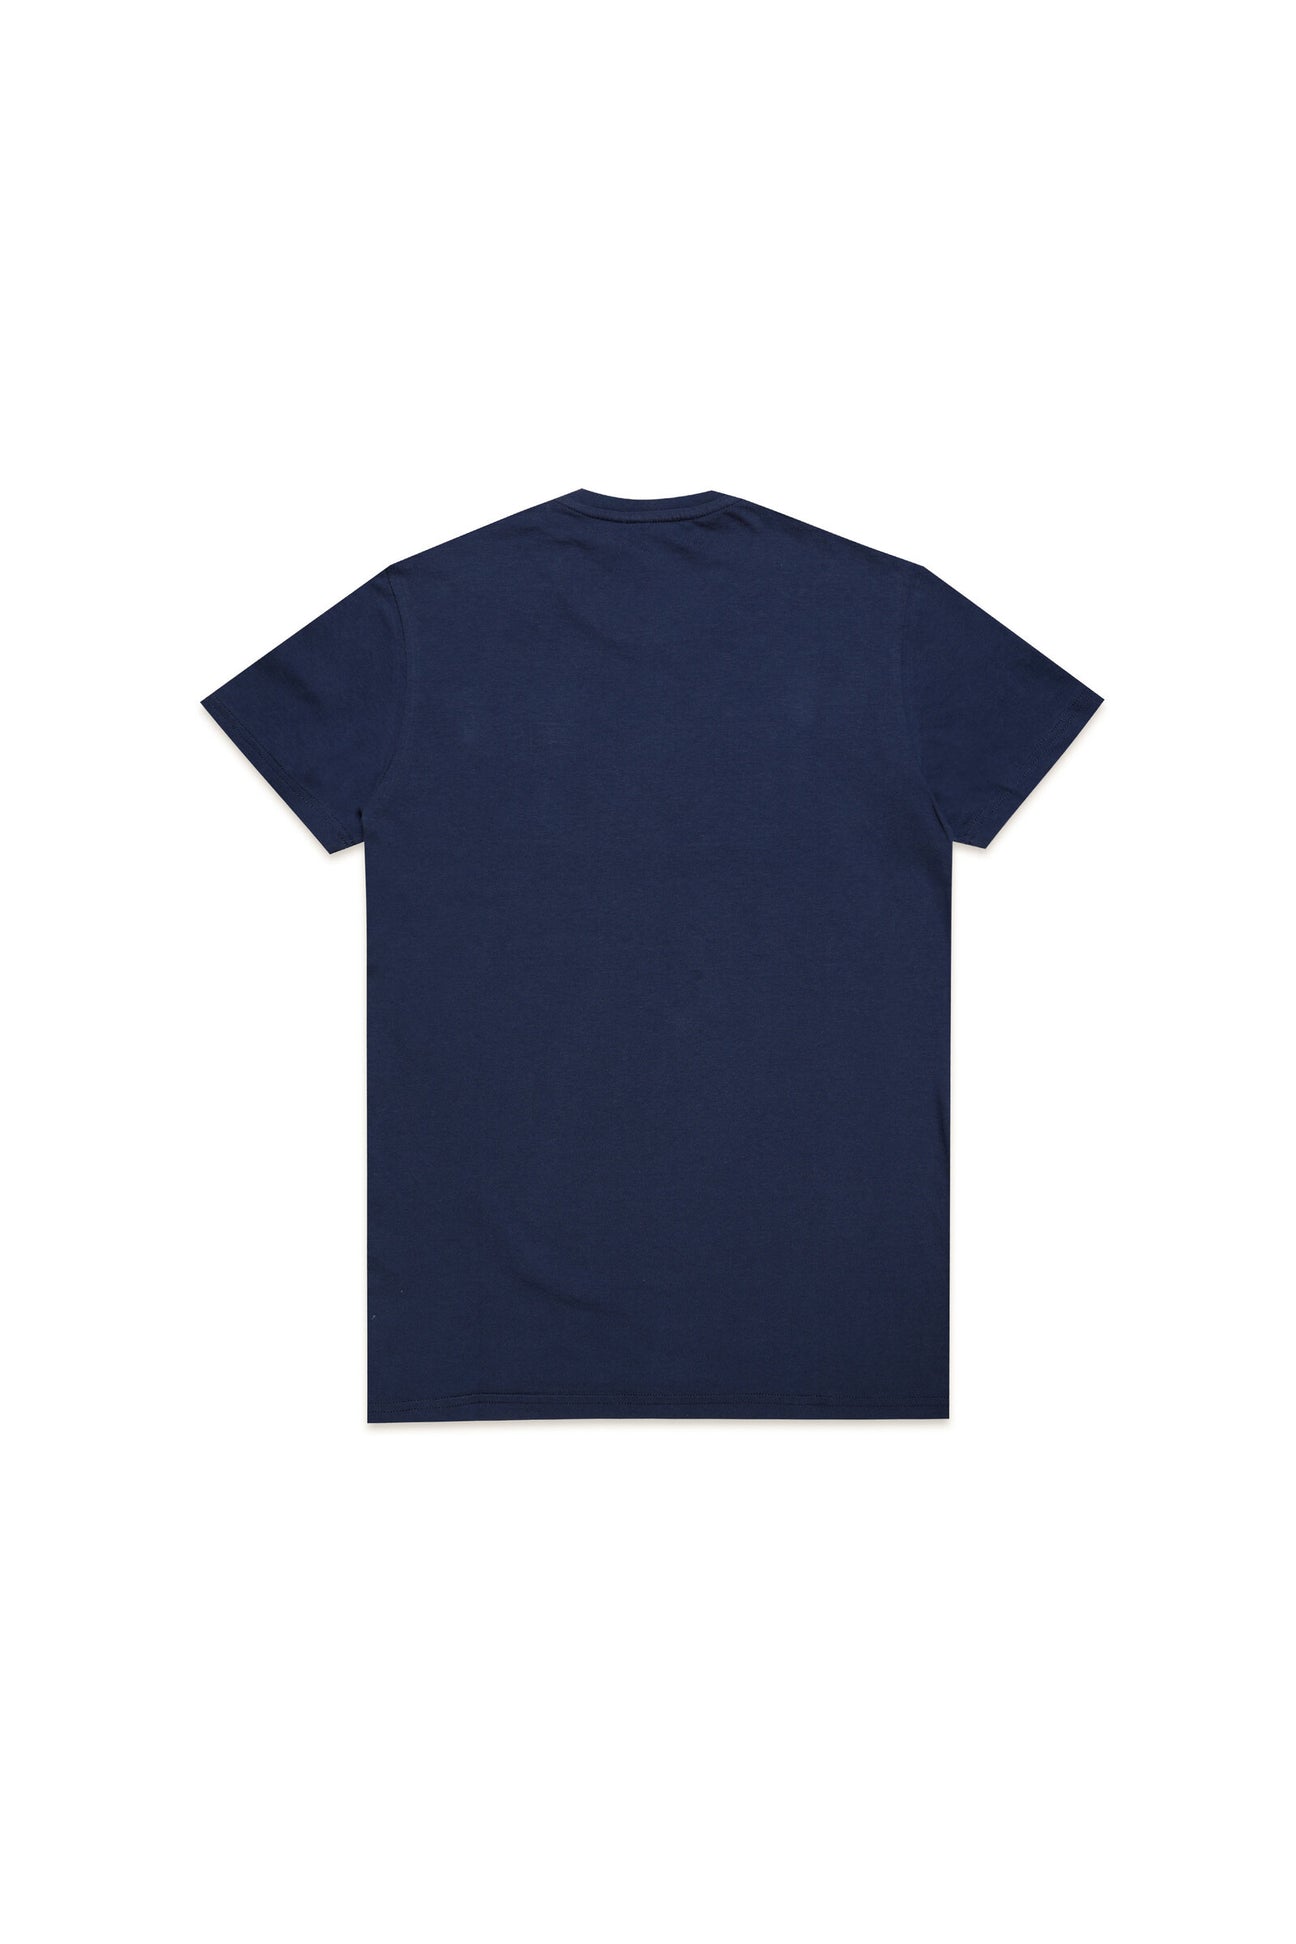 T-shirt blu scuro con applicazione logo Diesel T-shirt blu scuro con applicazione logo Diesel